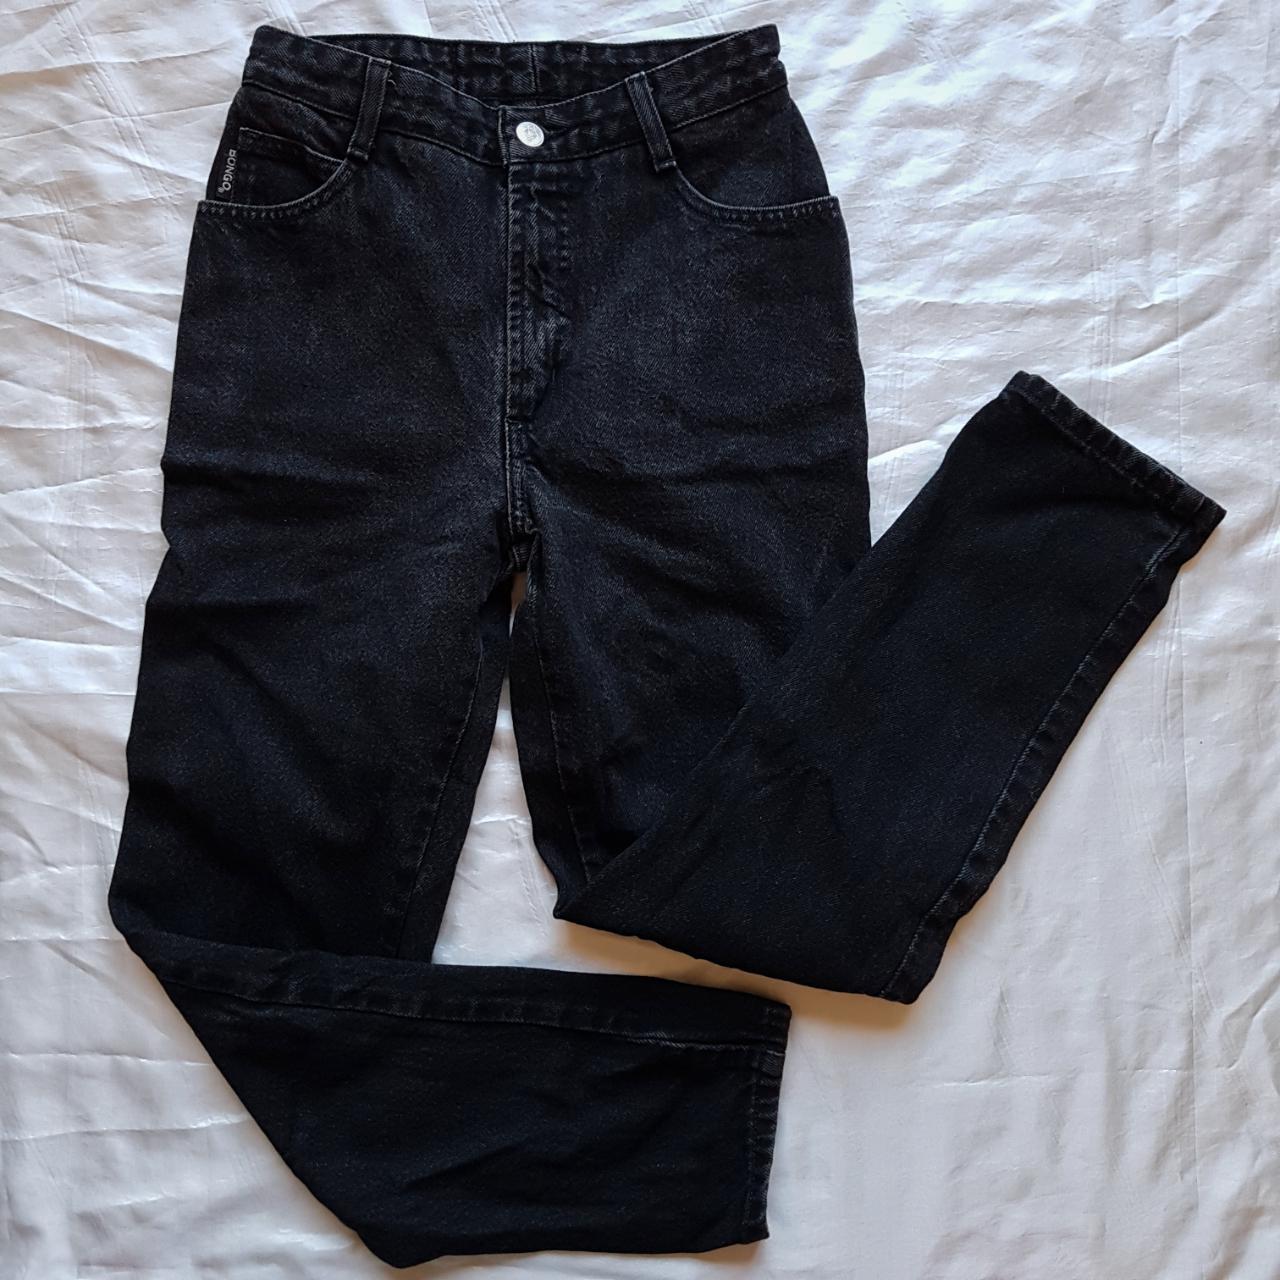 Product Image 1 - Vintage Bongo jeans in black